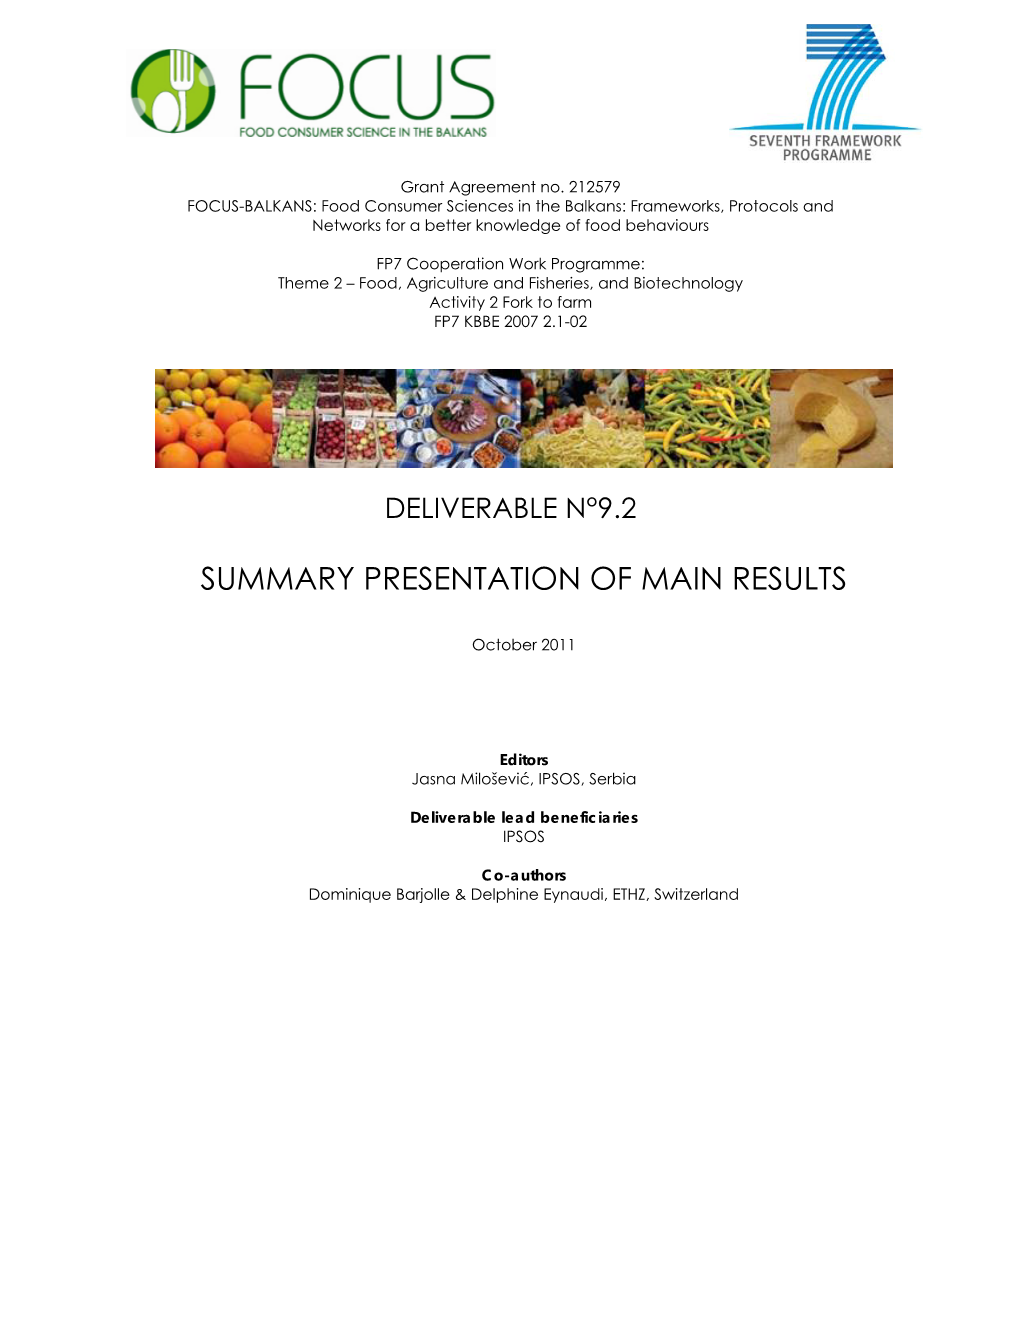 Summary Presentation of Main Results